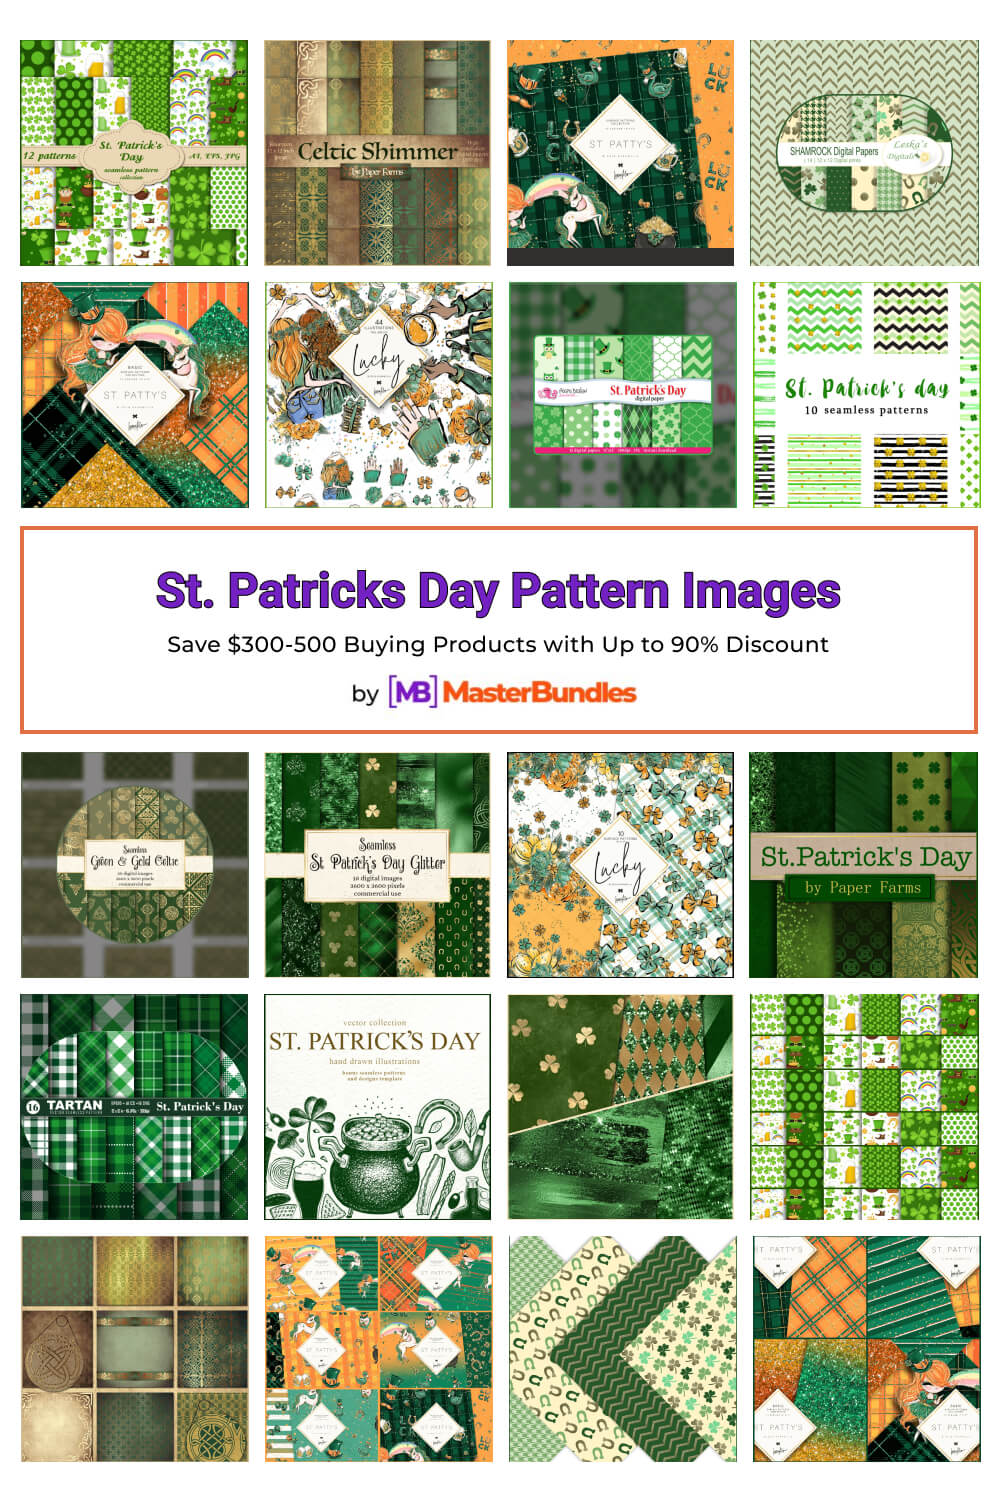 st. patricks day pattern images pinterest image.